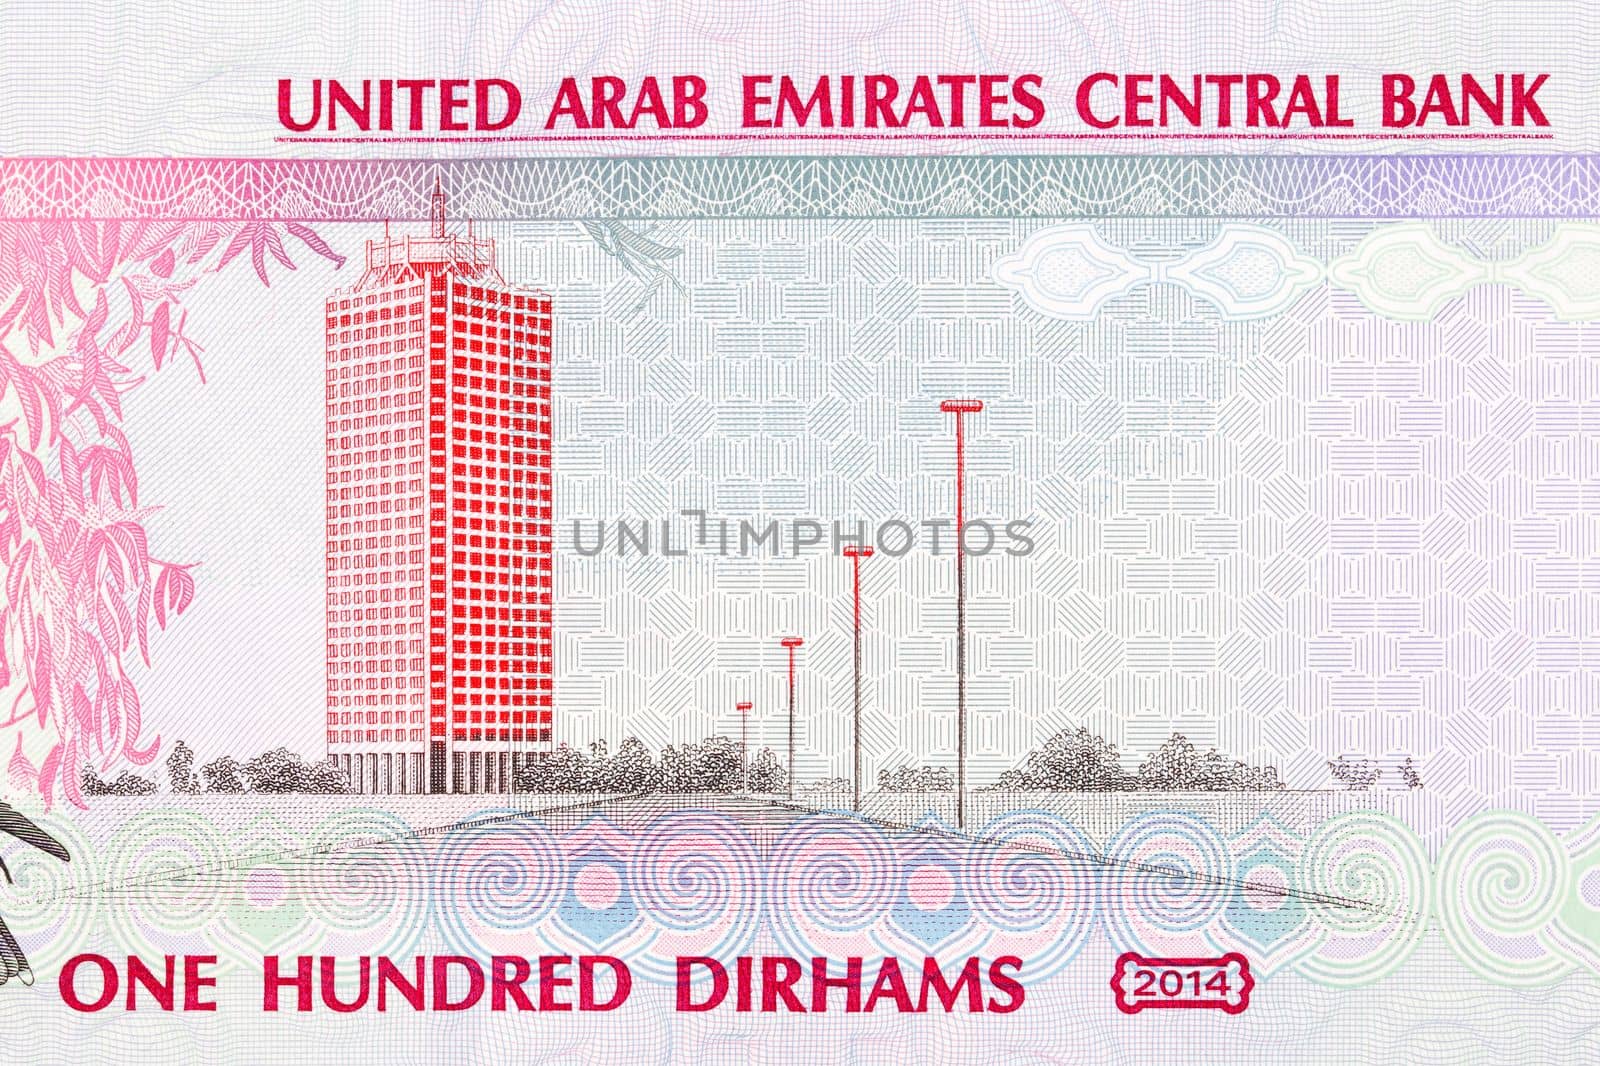 Dubai Shopping Centre from United Arab Emirates money by johan10